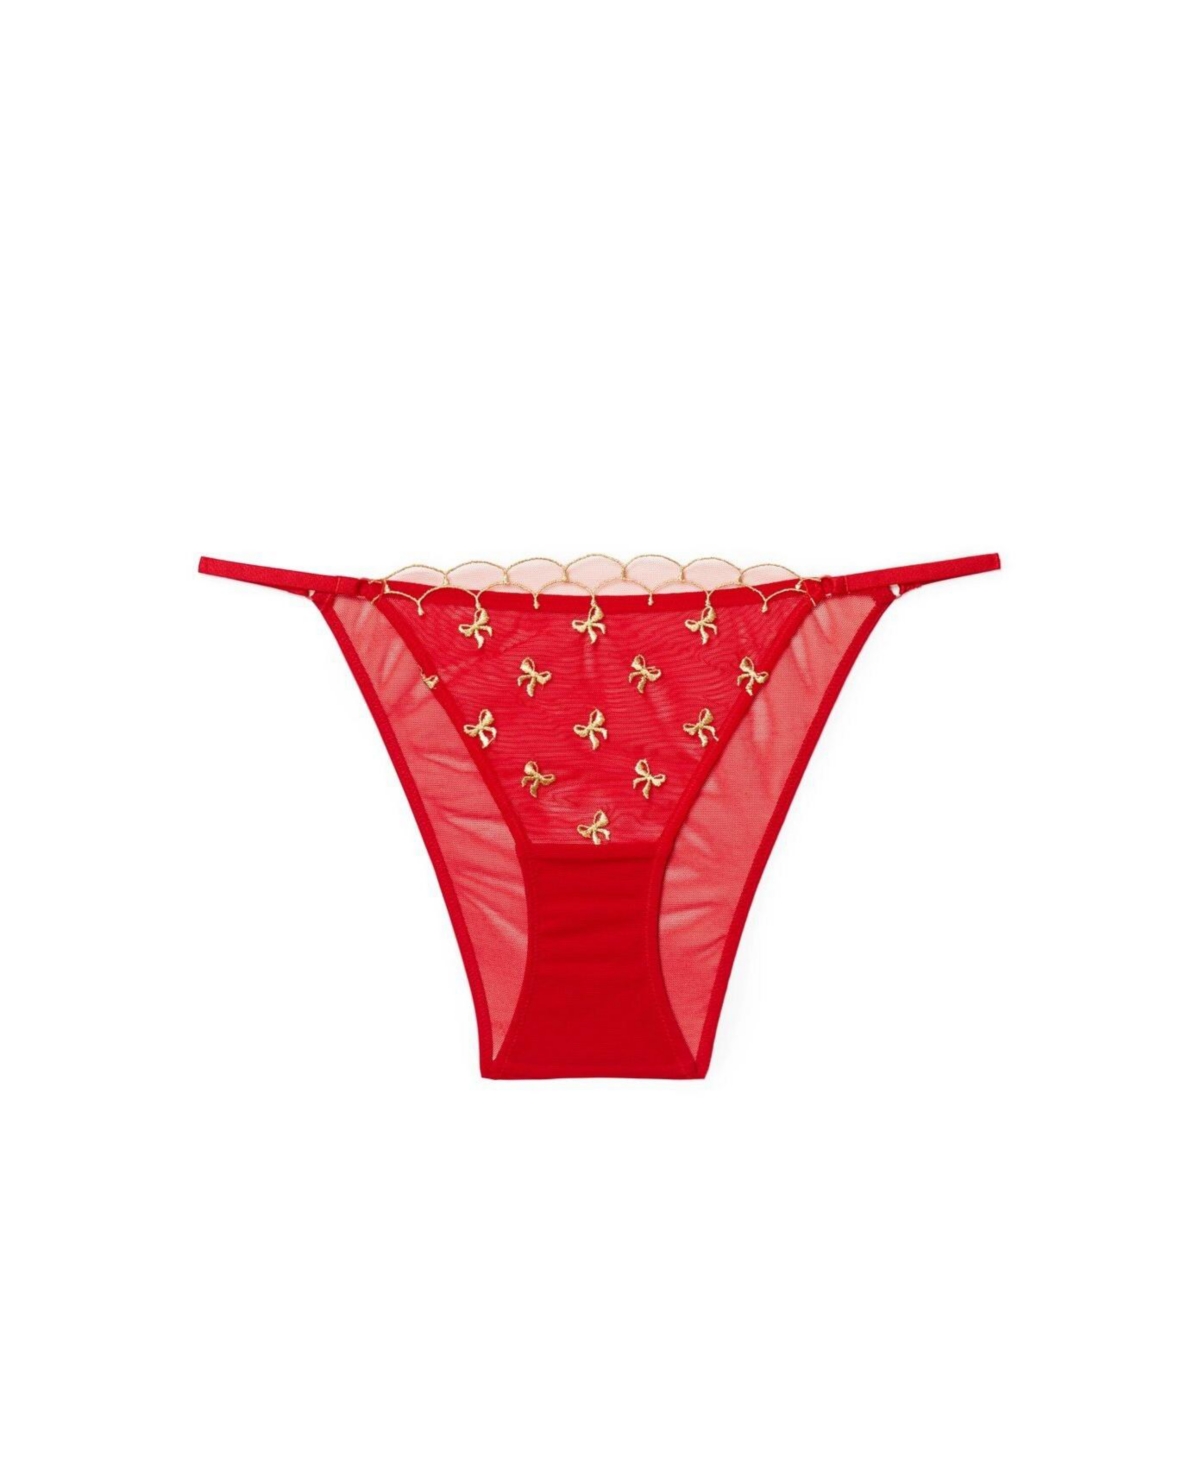 Women's Bettie Brazilian Panty - Holiday Edition - Dark red